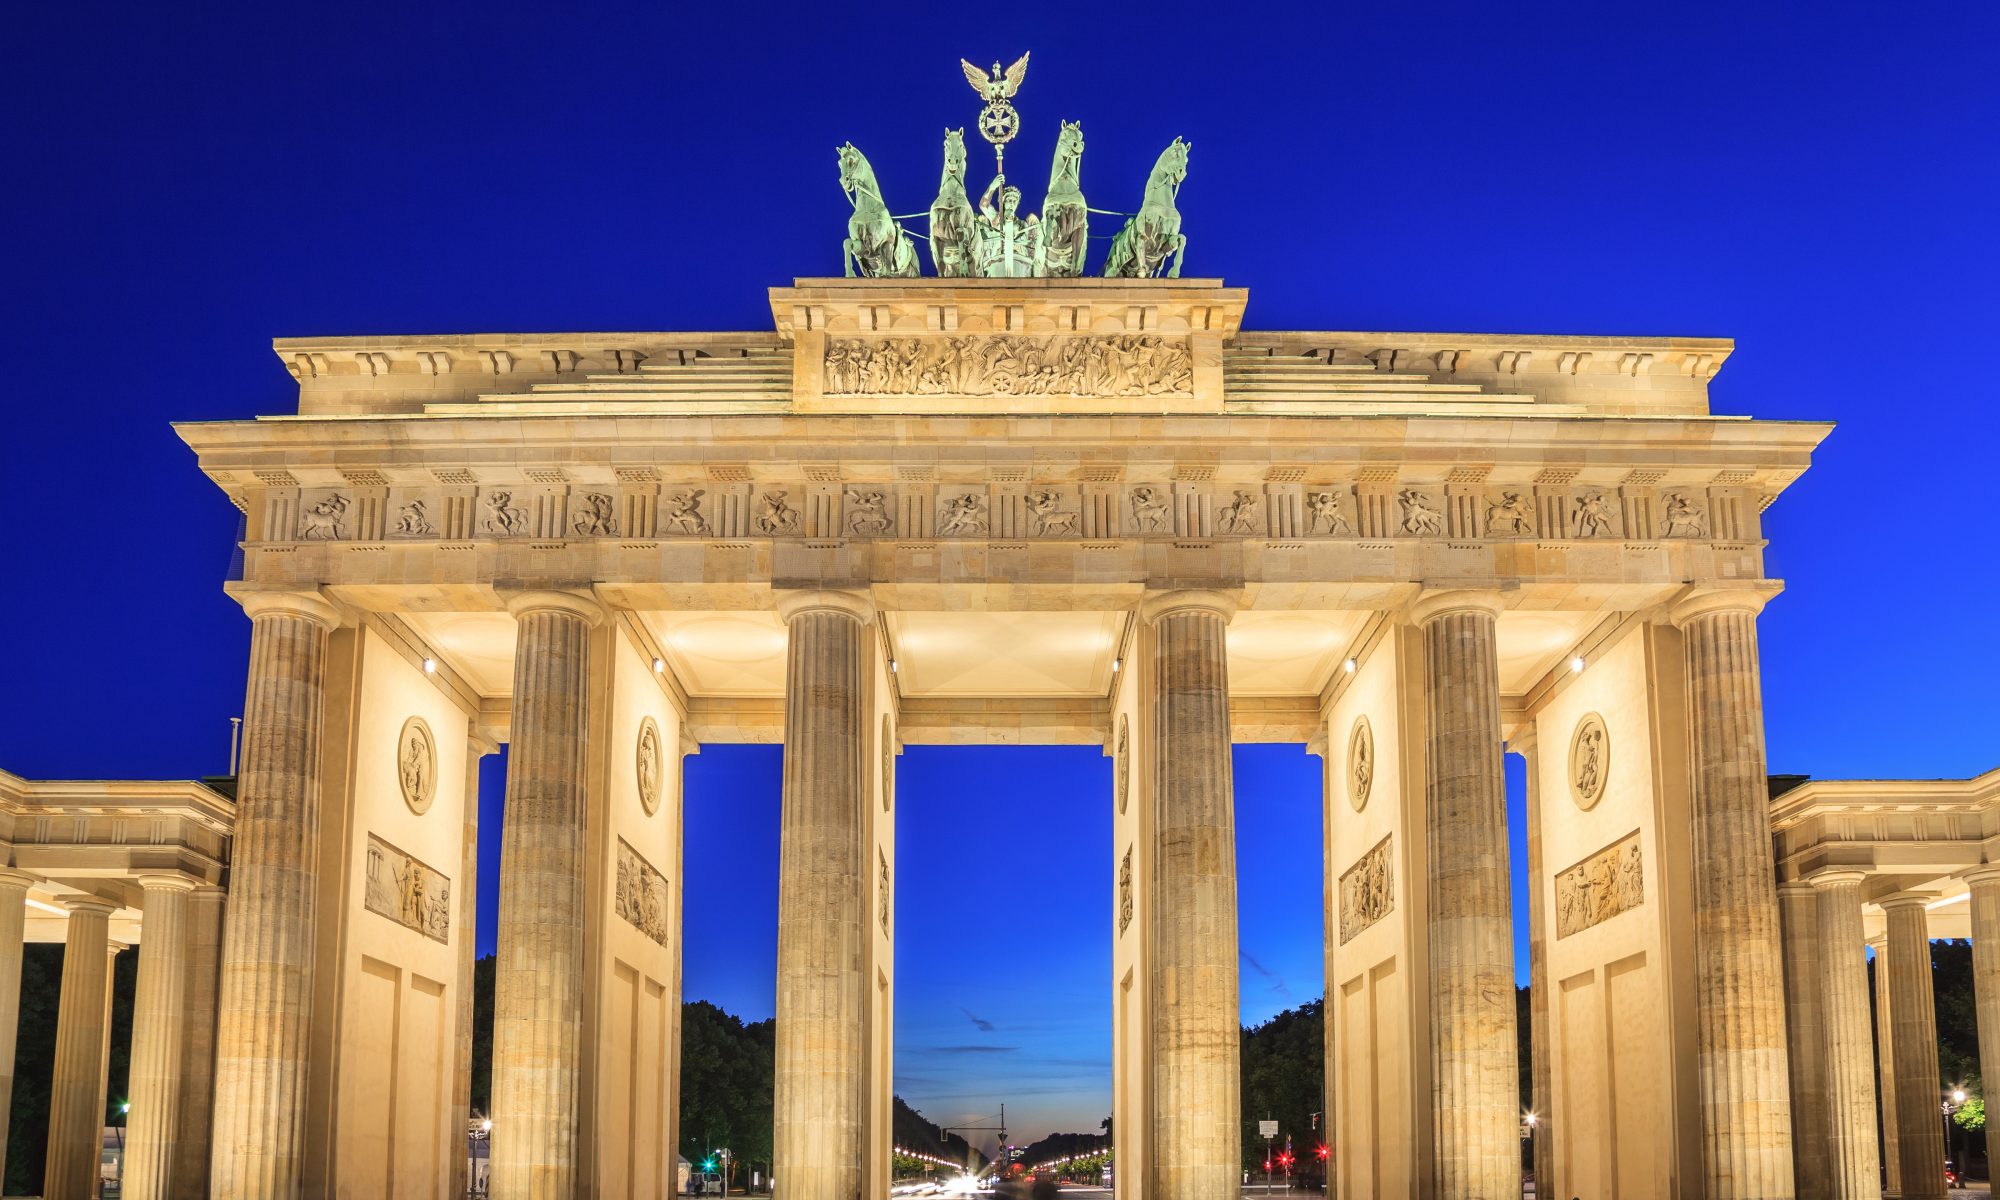 Brandenburg gate of Berlin, Germany